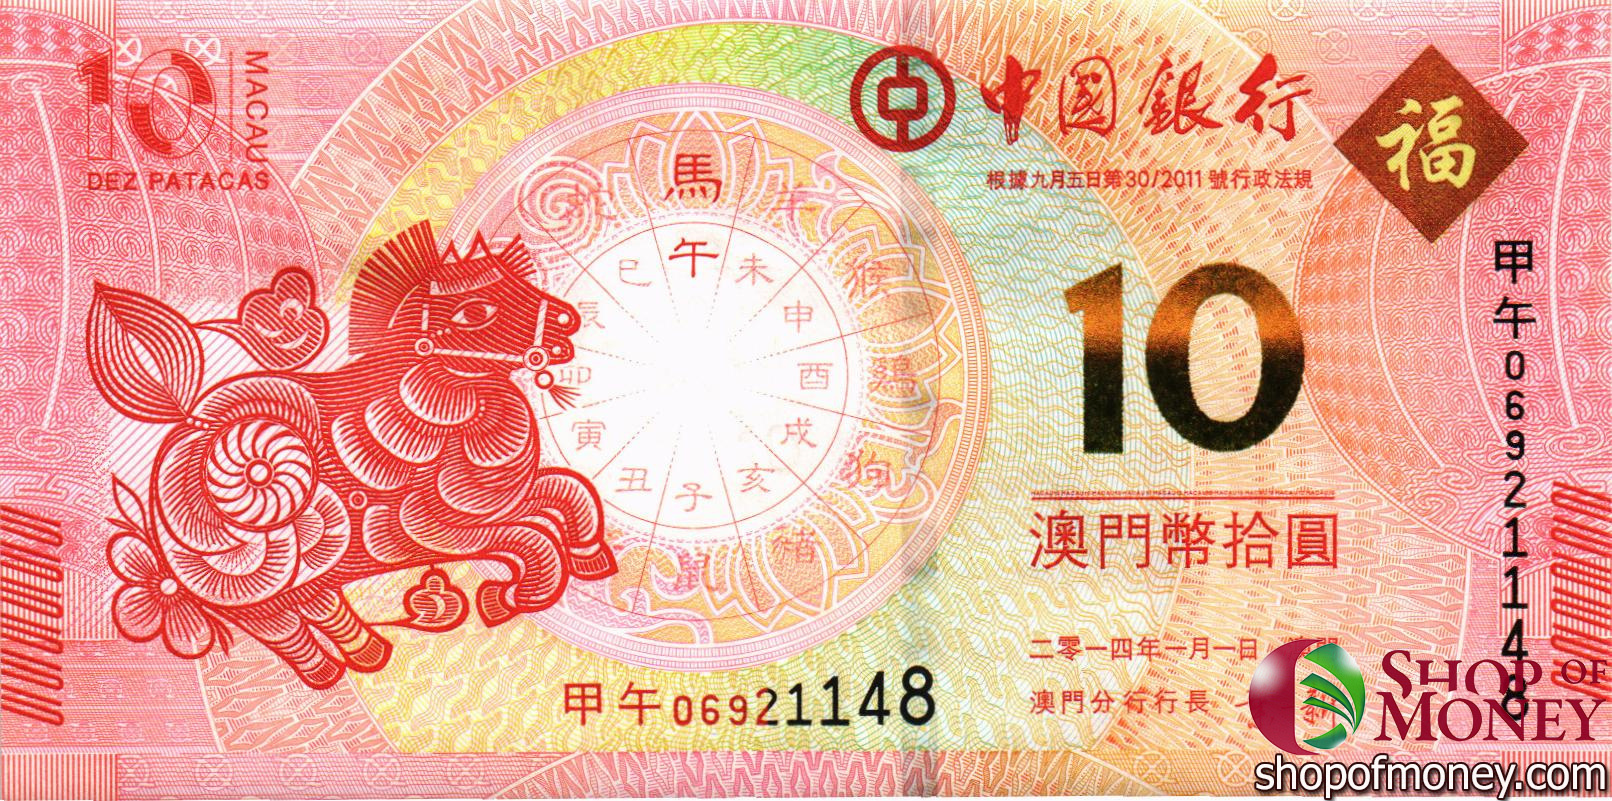 МАКАО 10 ПАТАК (BANK OF CHINA) мини 1